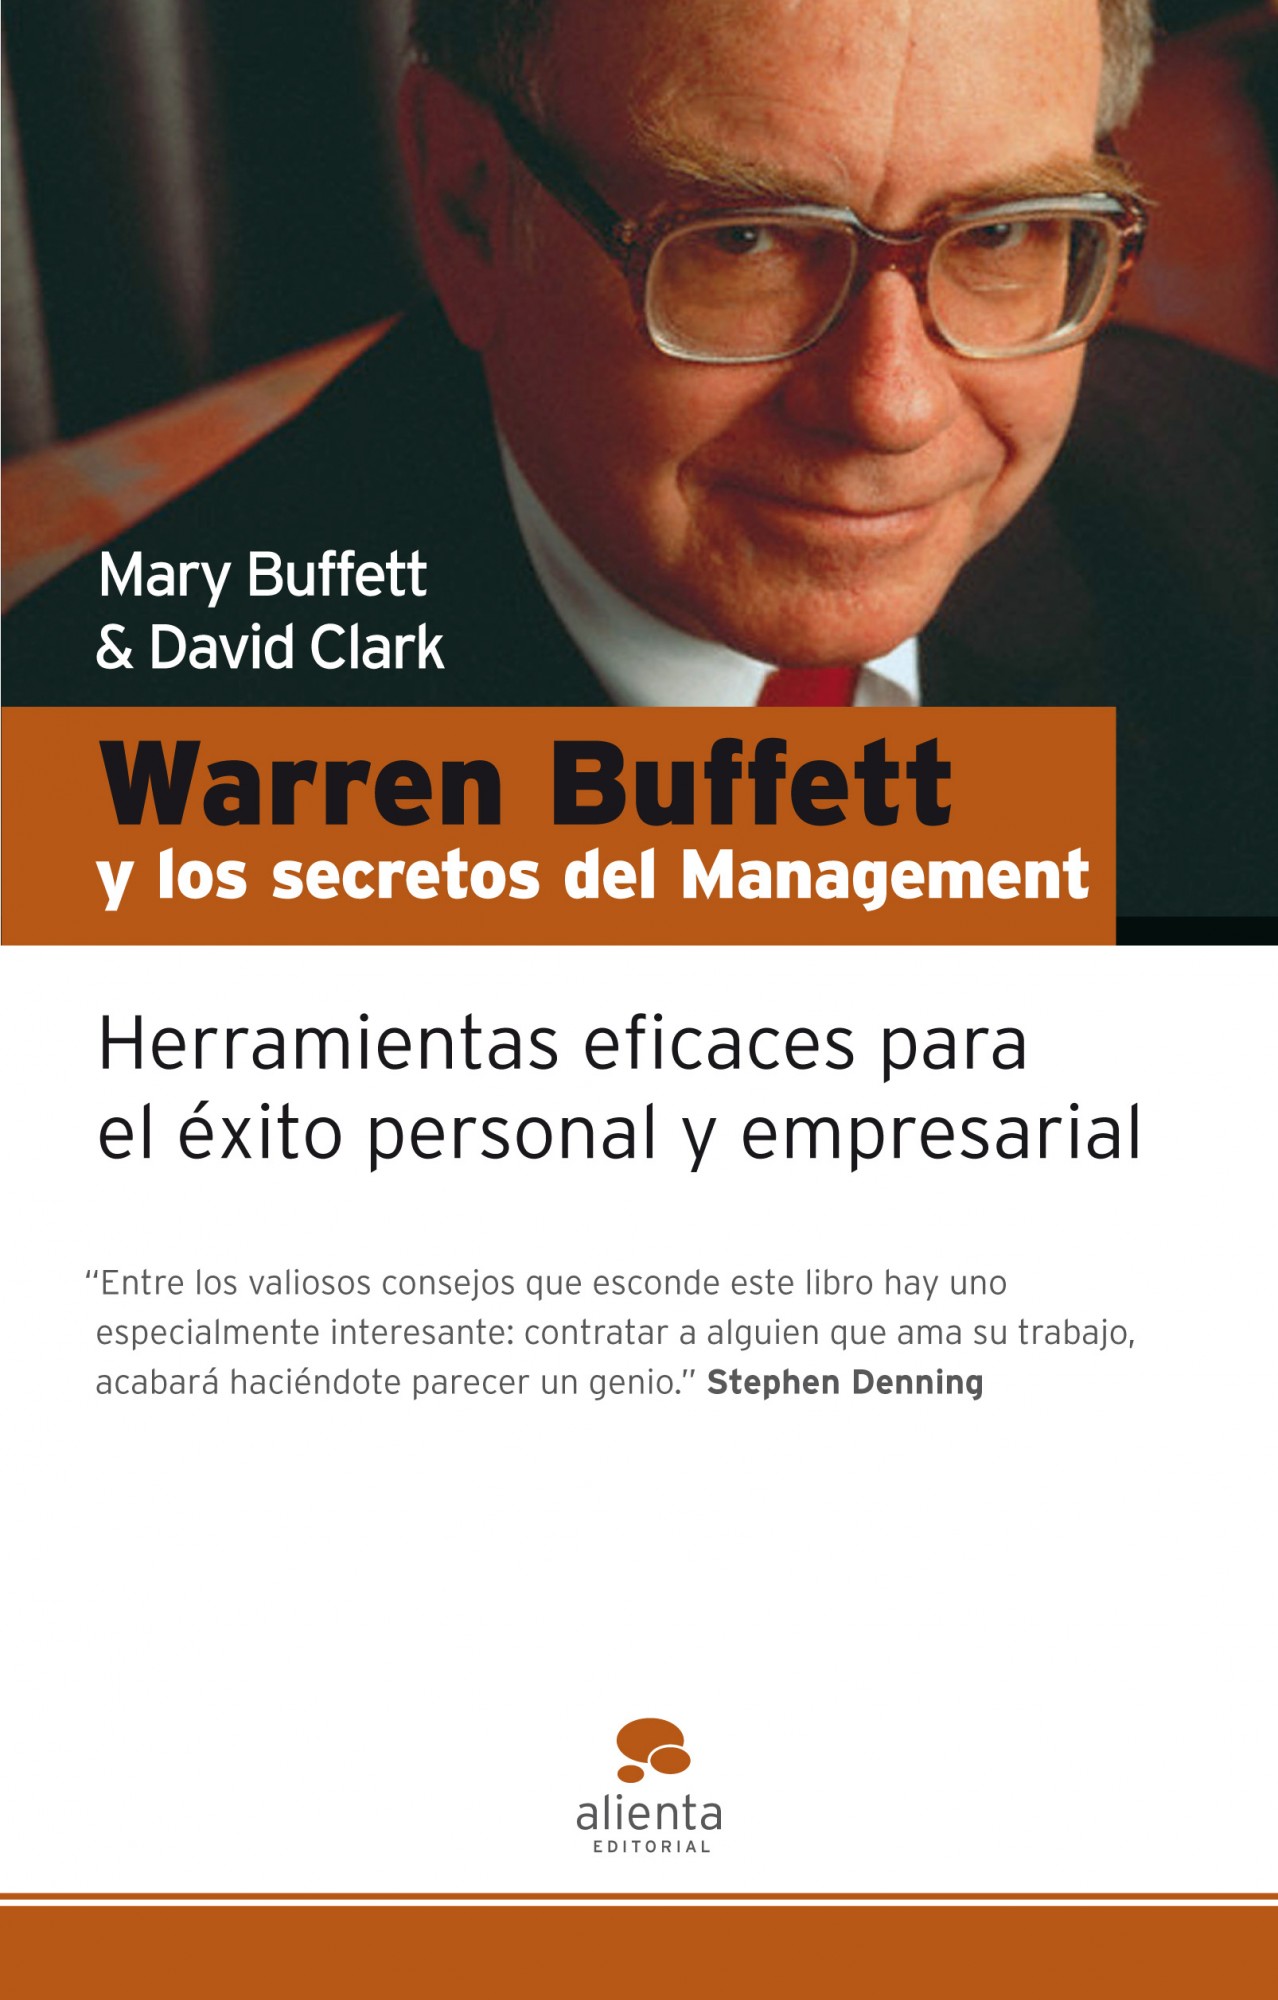 Warren Buffett y los secretos del Management